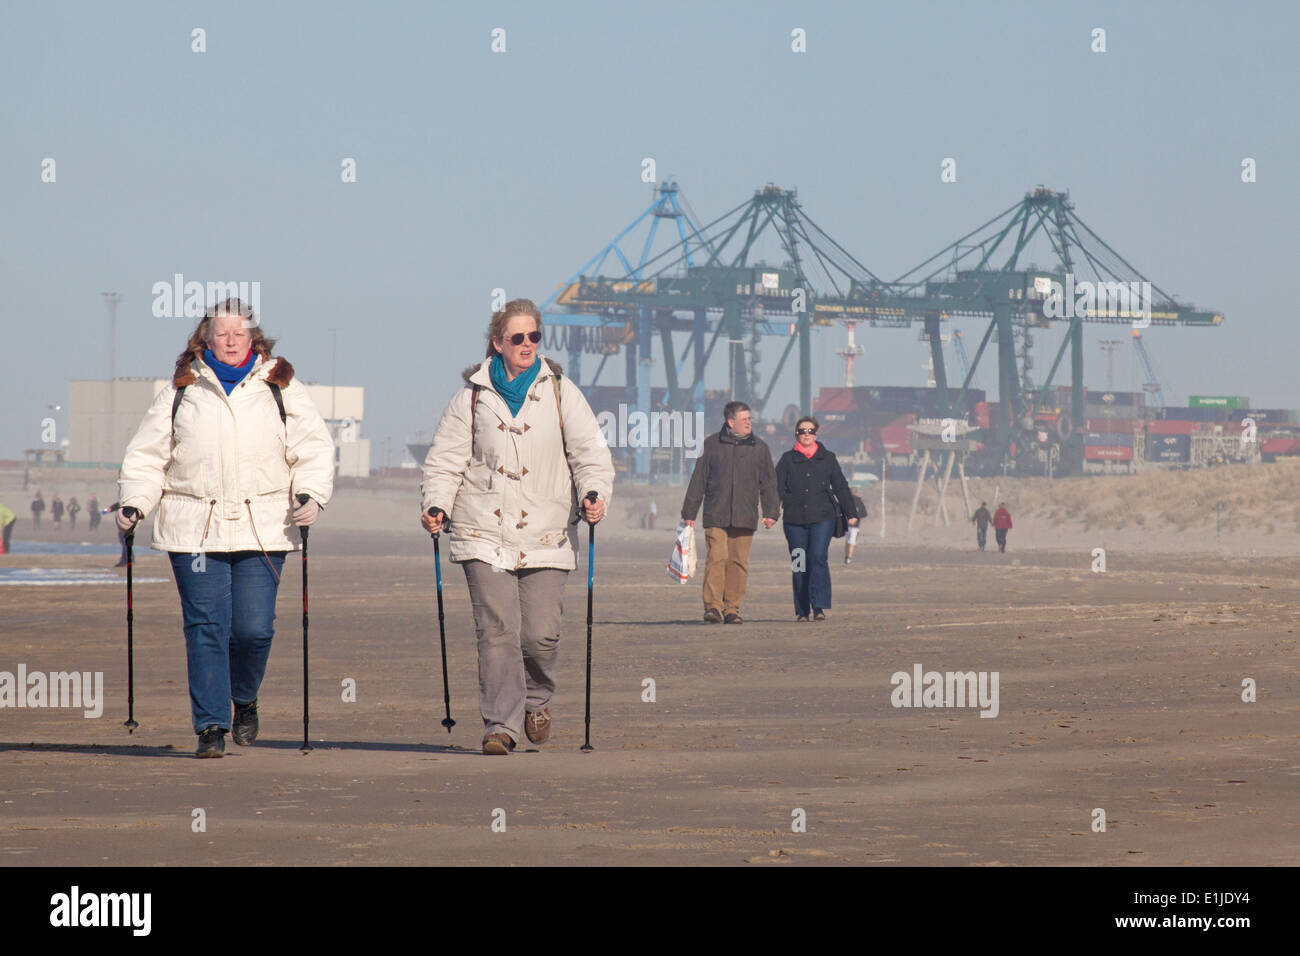 People strolling on beach with port cranes on horizon, Zeebrugge, Belgium Stock Photo